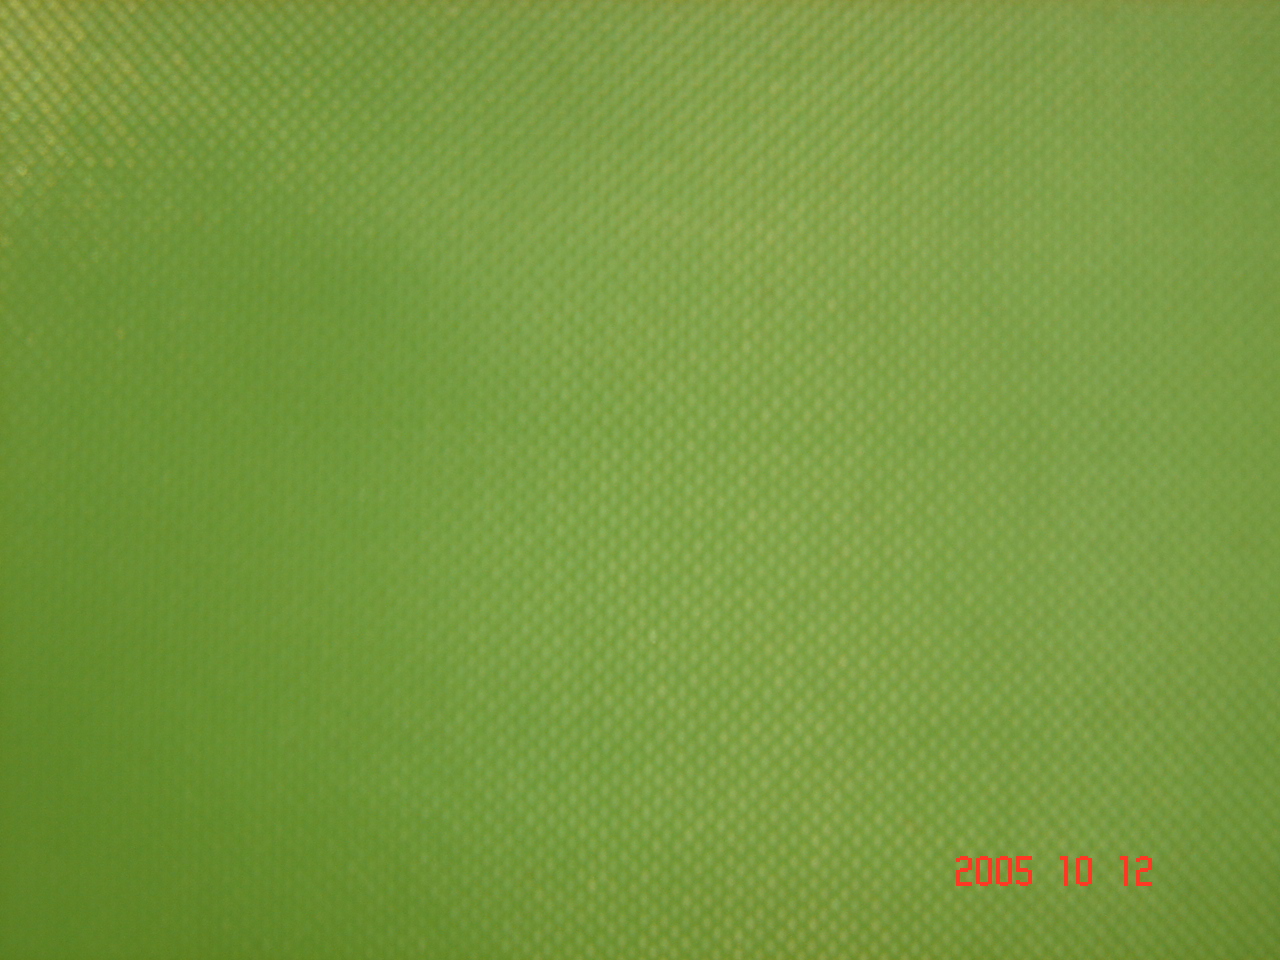 pvc coated fabric(420D)